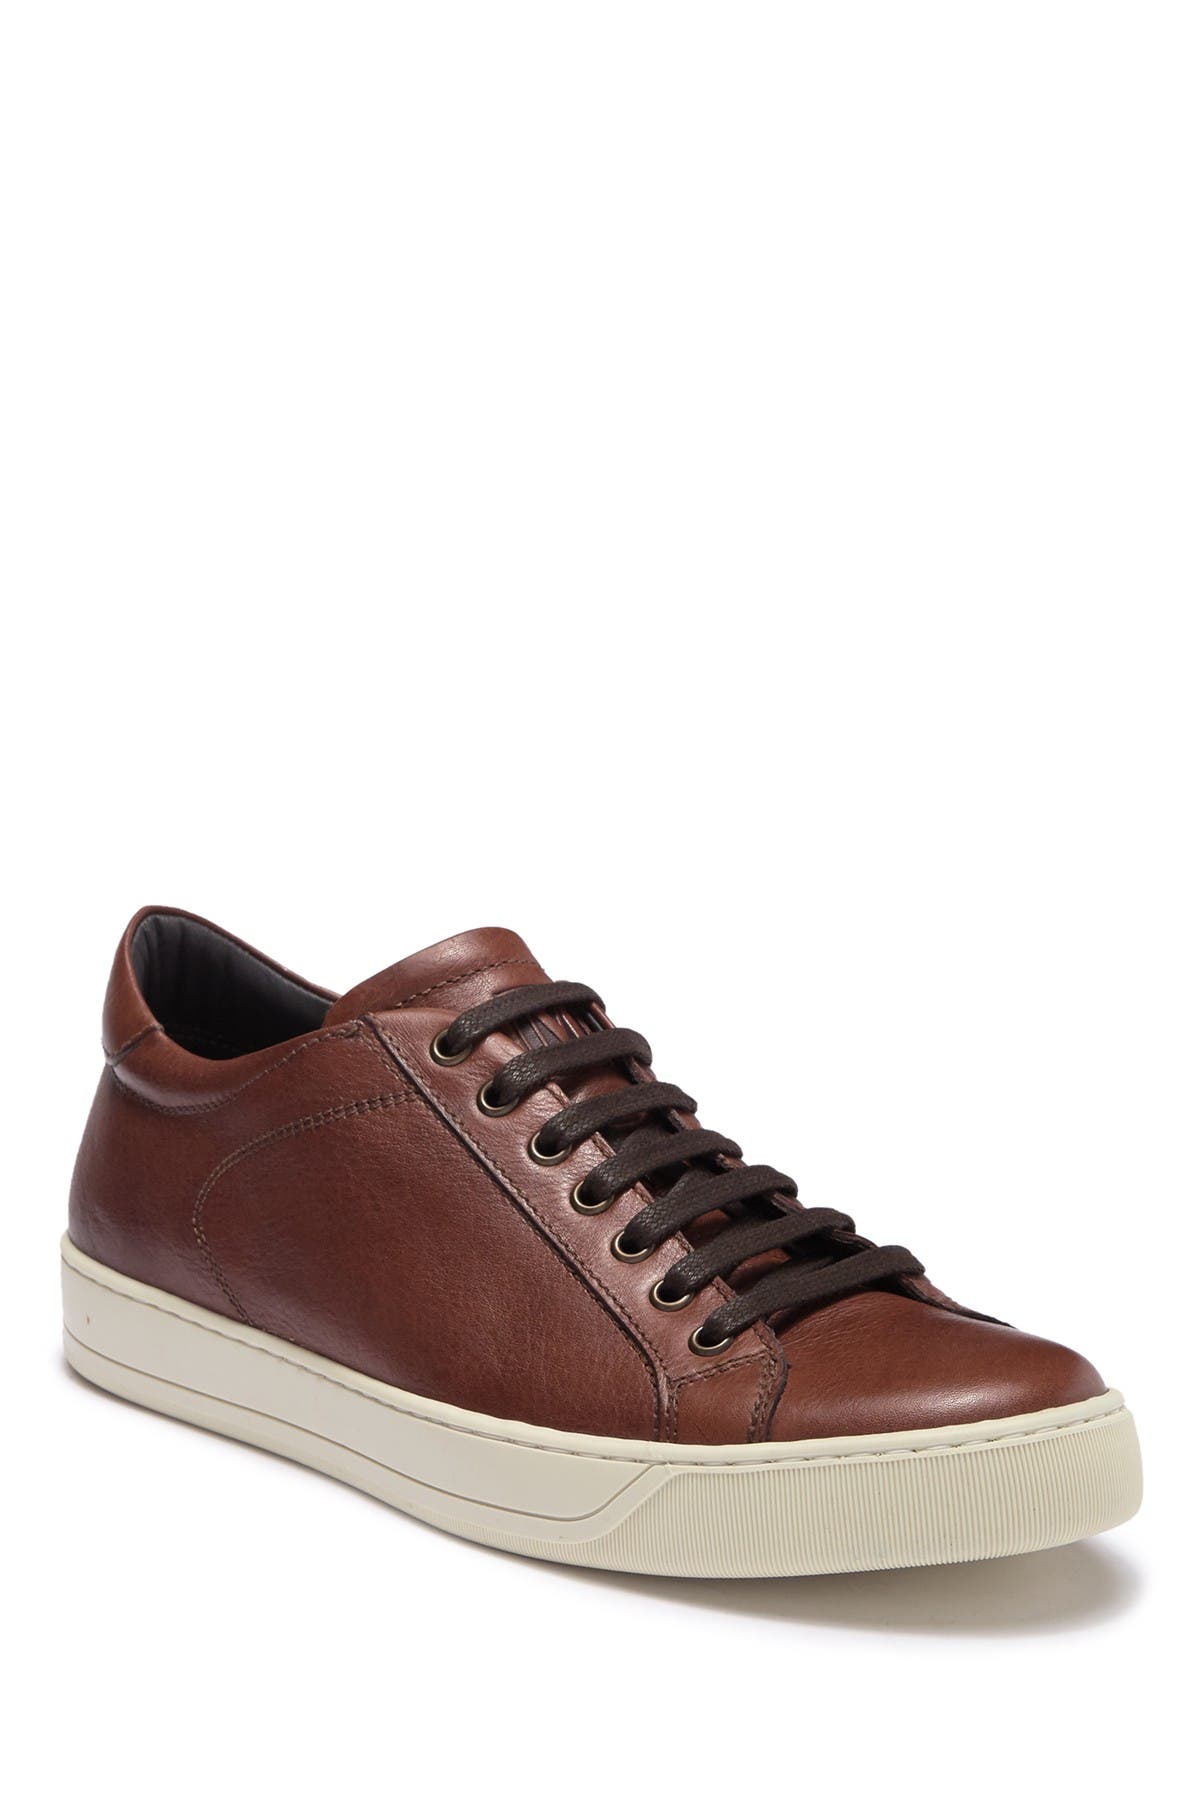 bruno magli westy leather sneaker